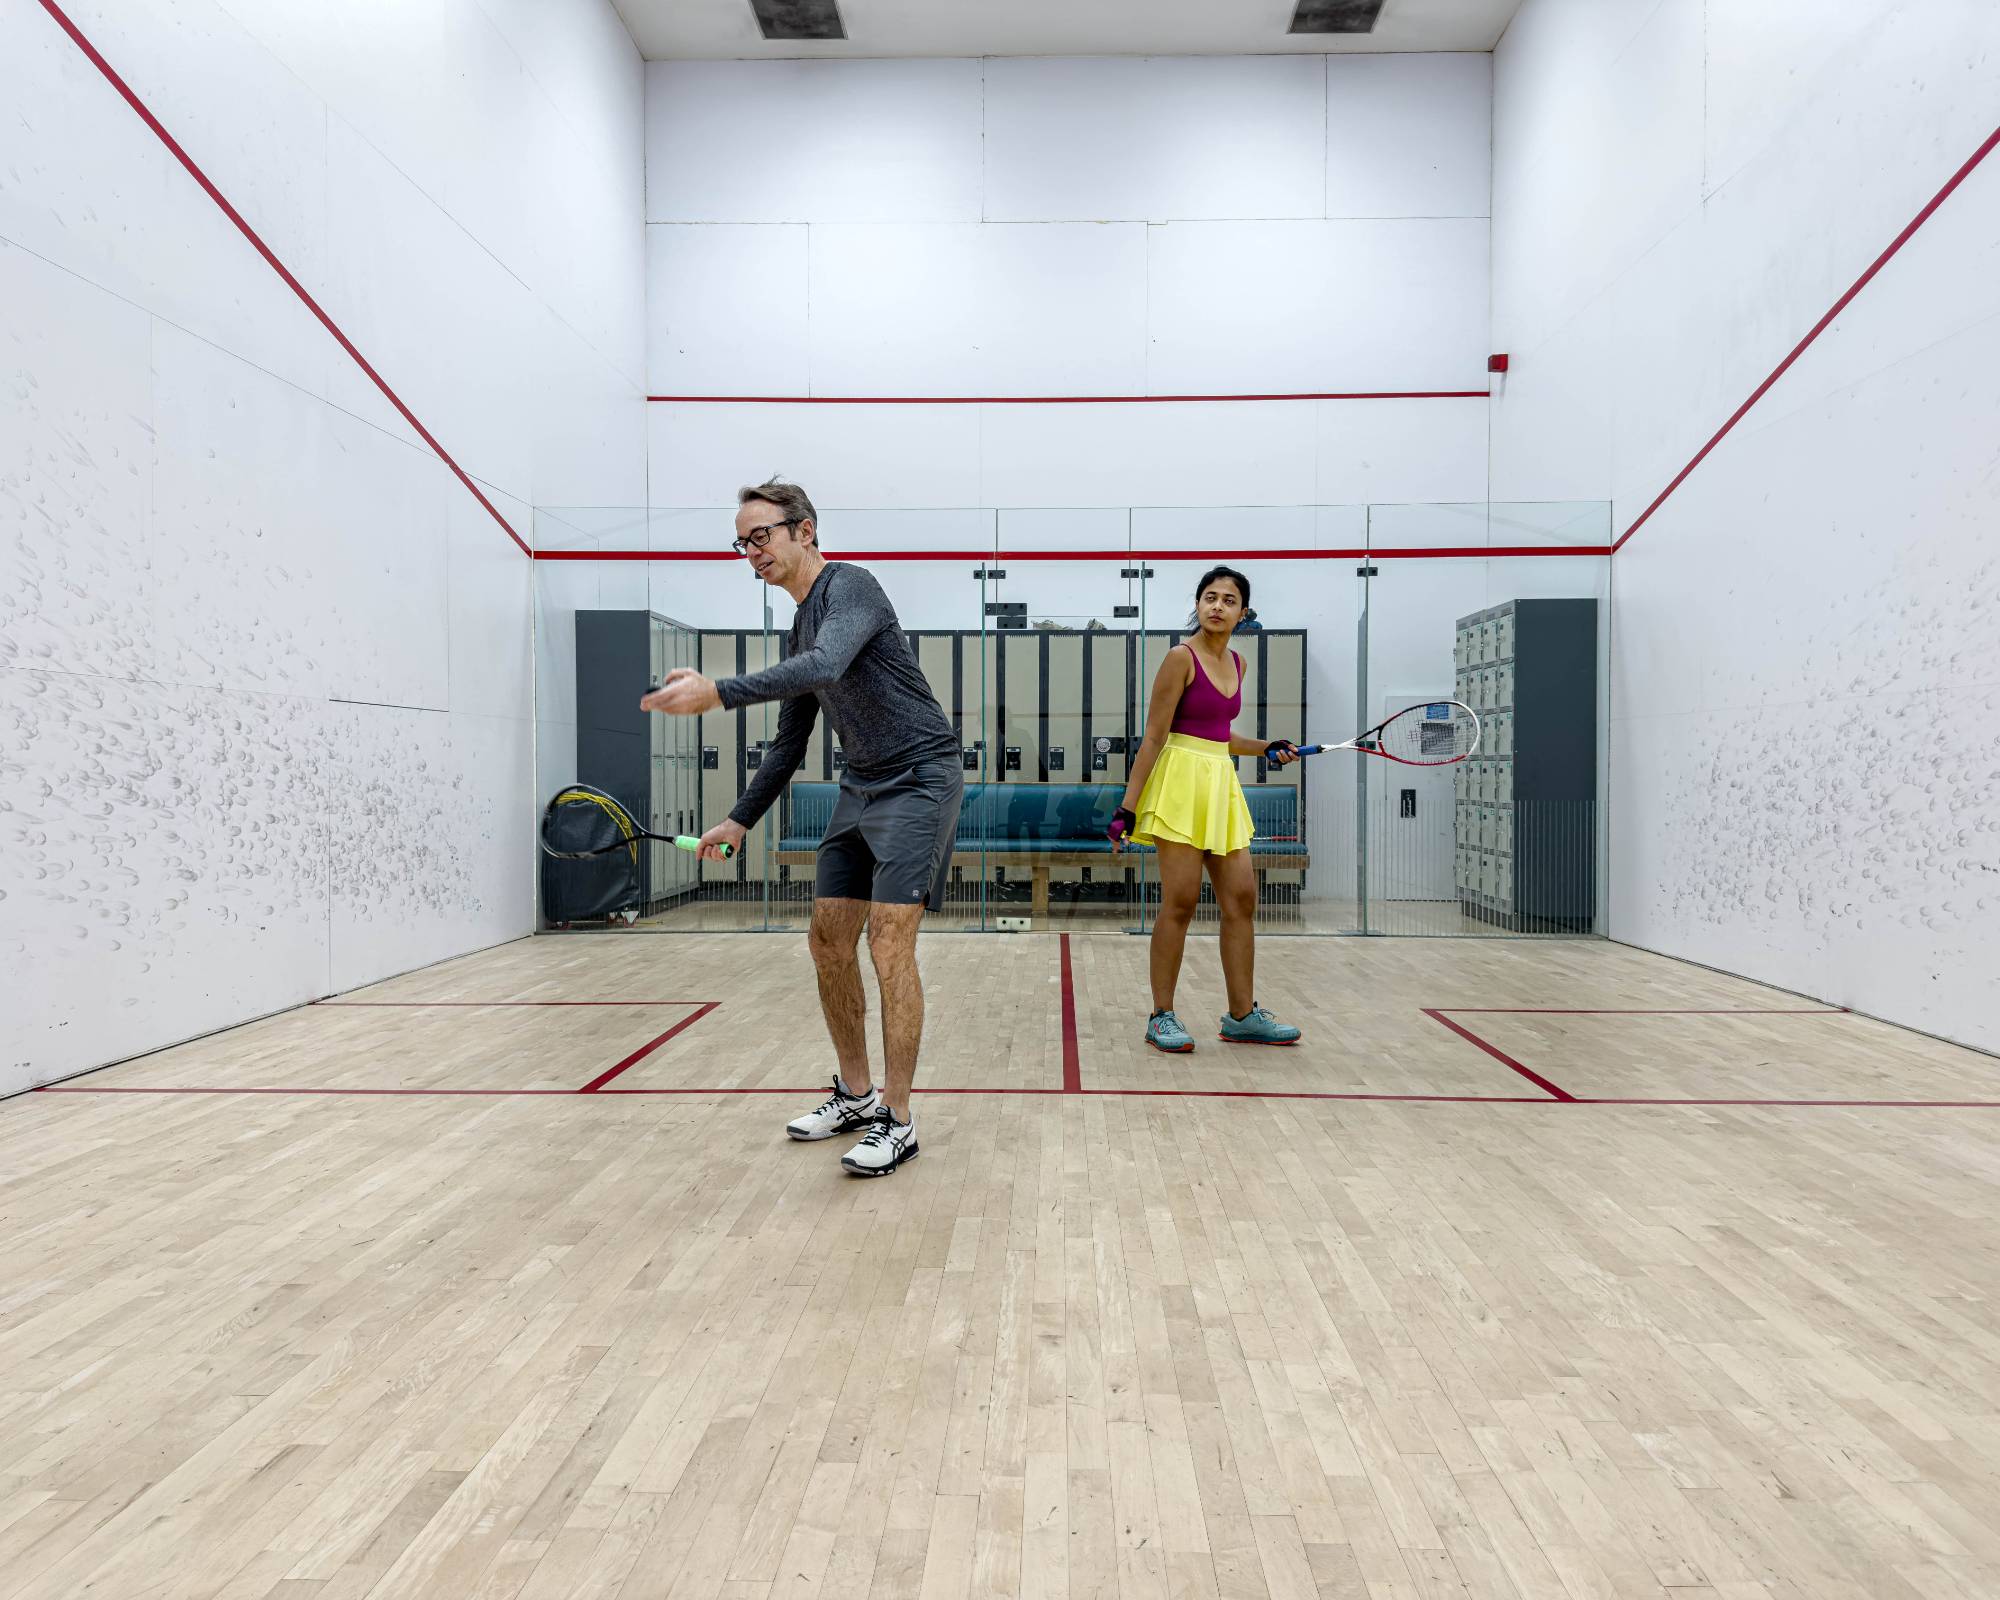 players playing squash